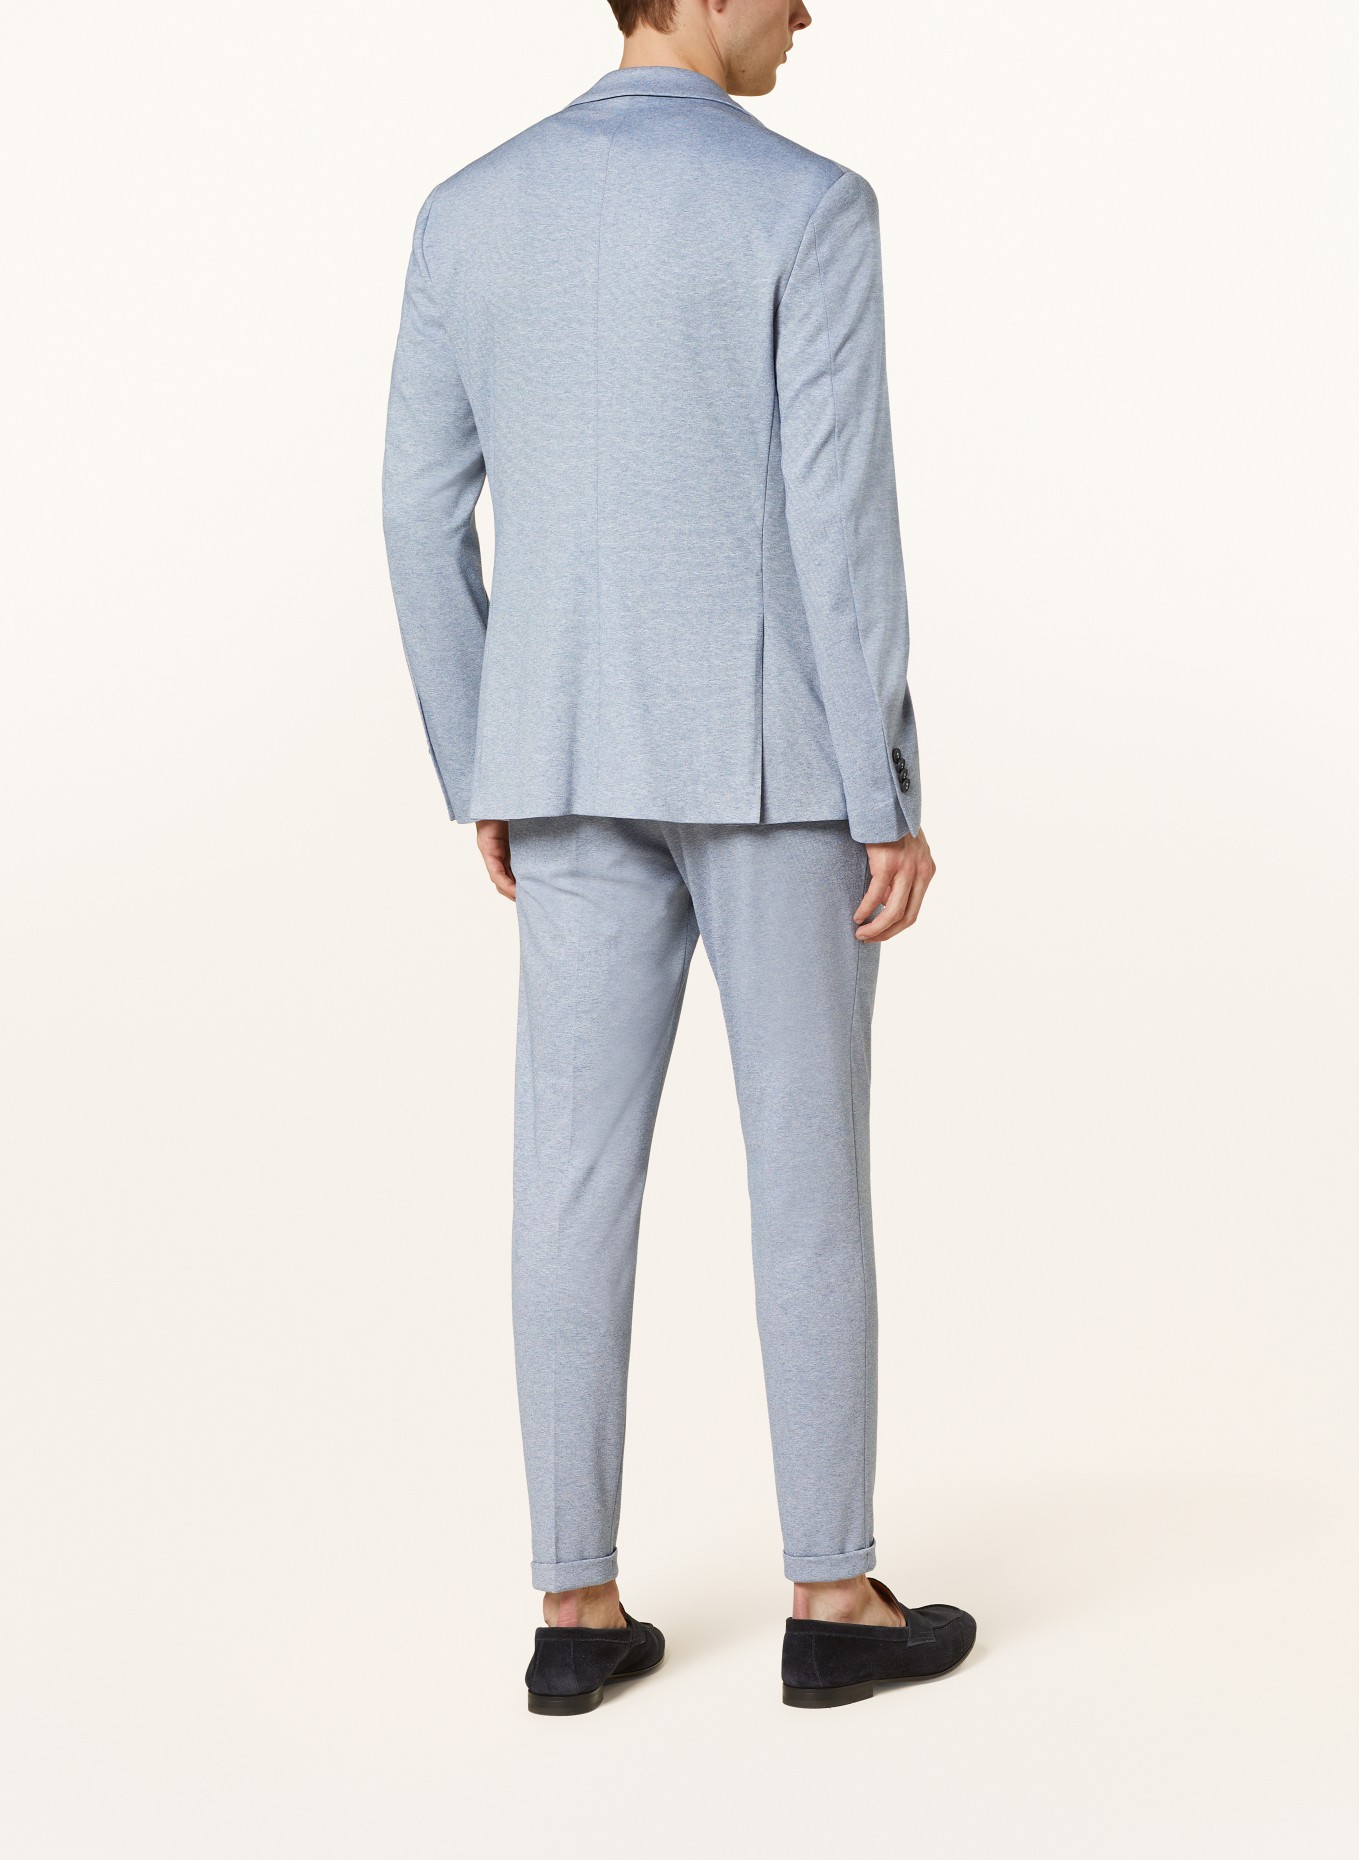 CINQUE Suit jacket CIDATI extra slim fit in jersey, Color: 68 dunkelblau (Image 3)